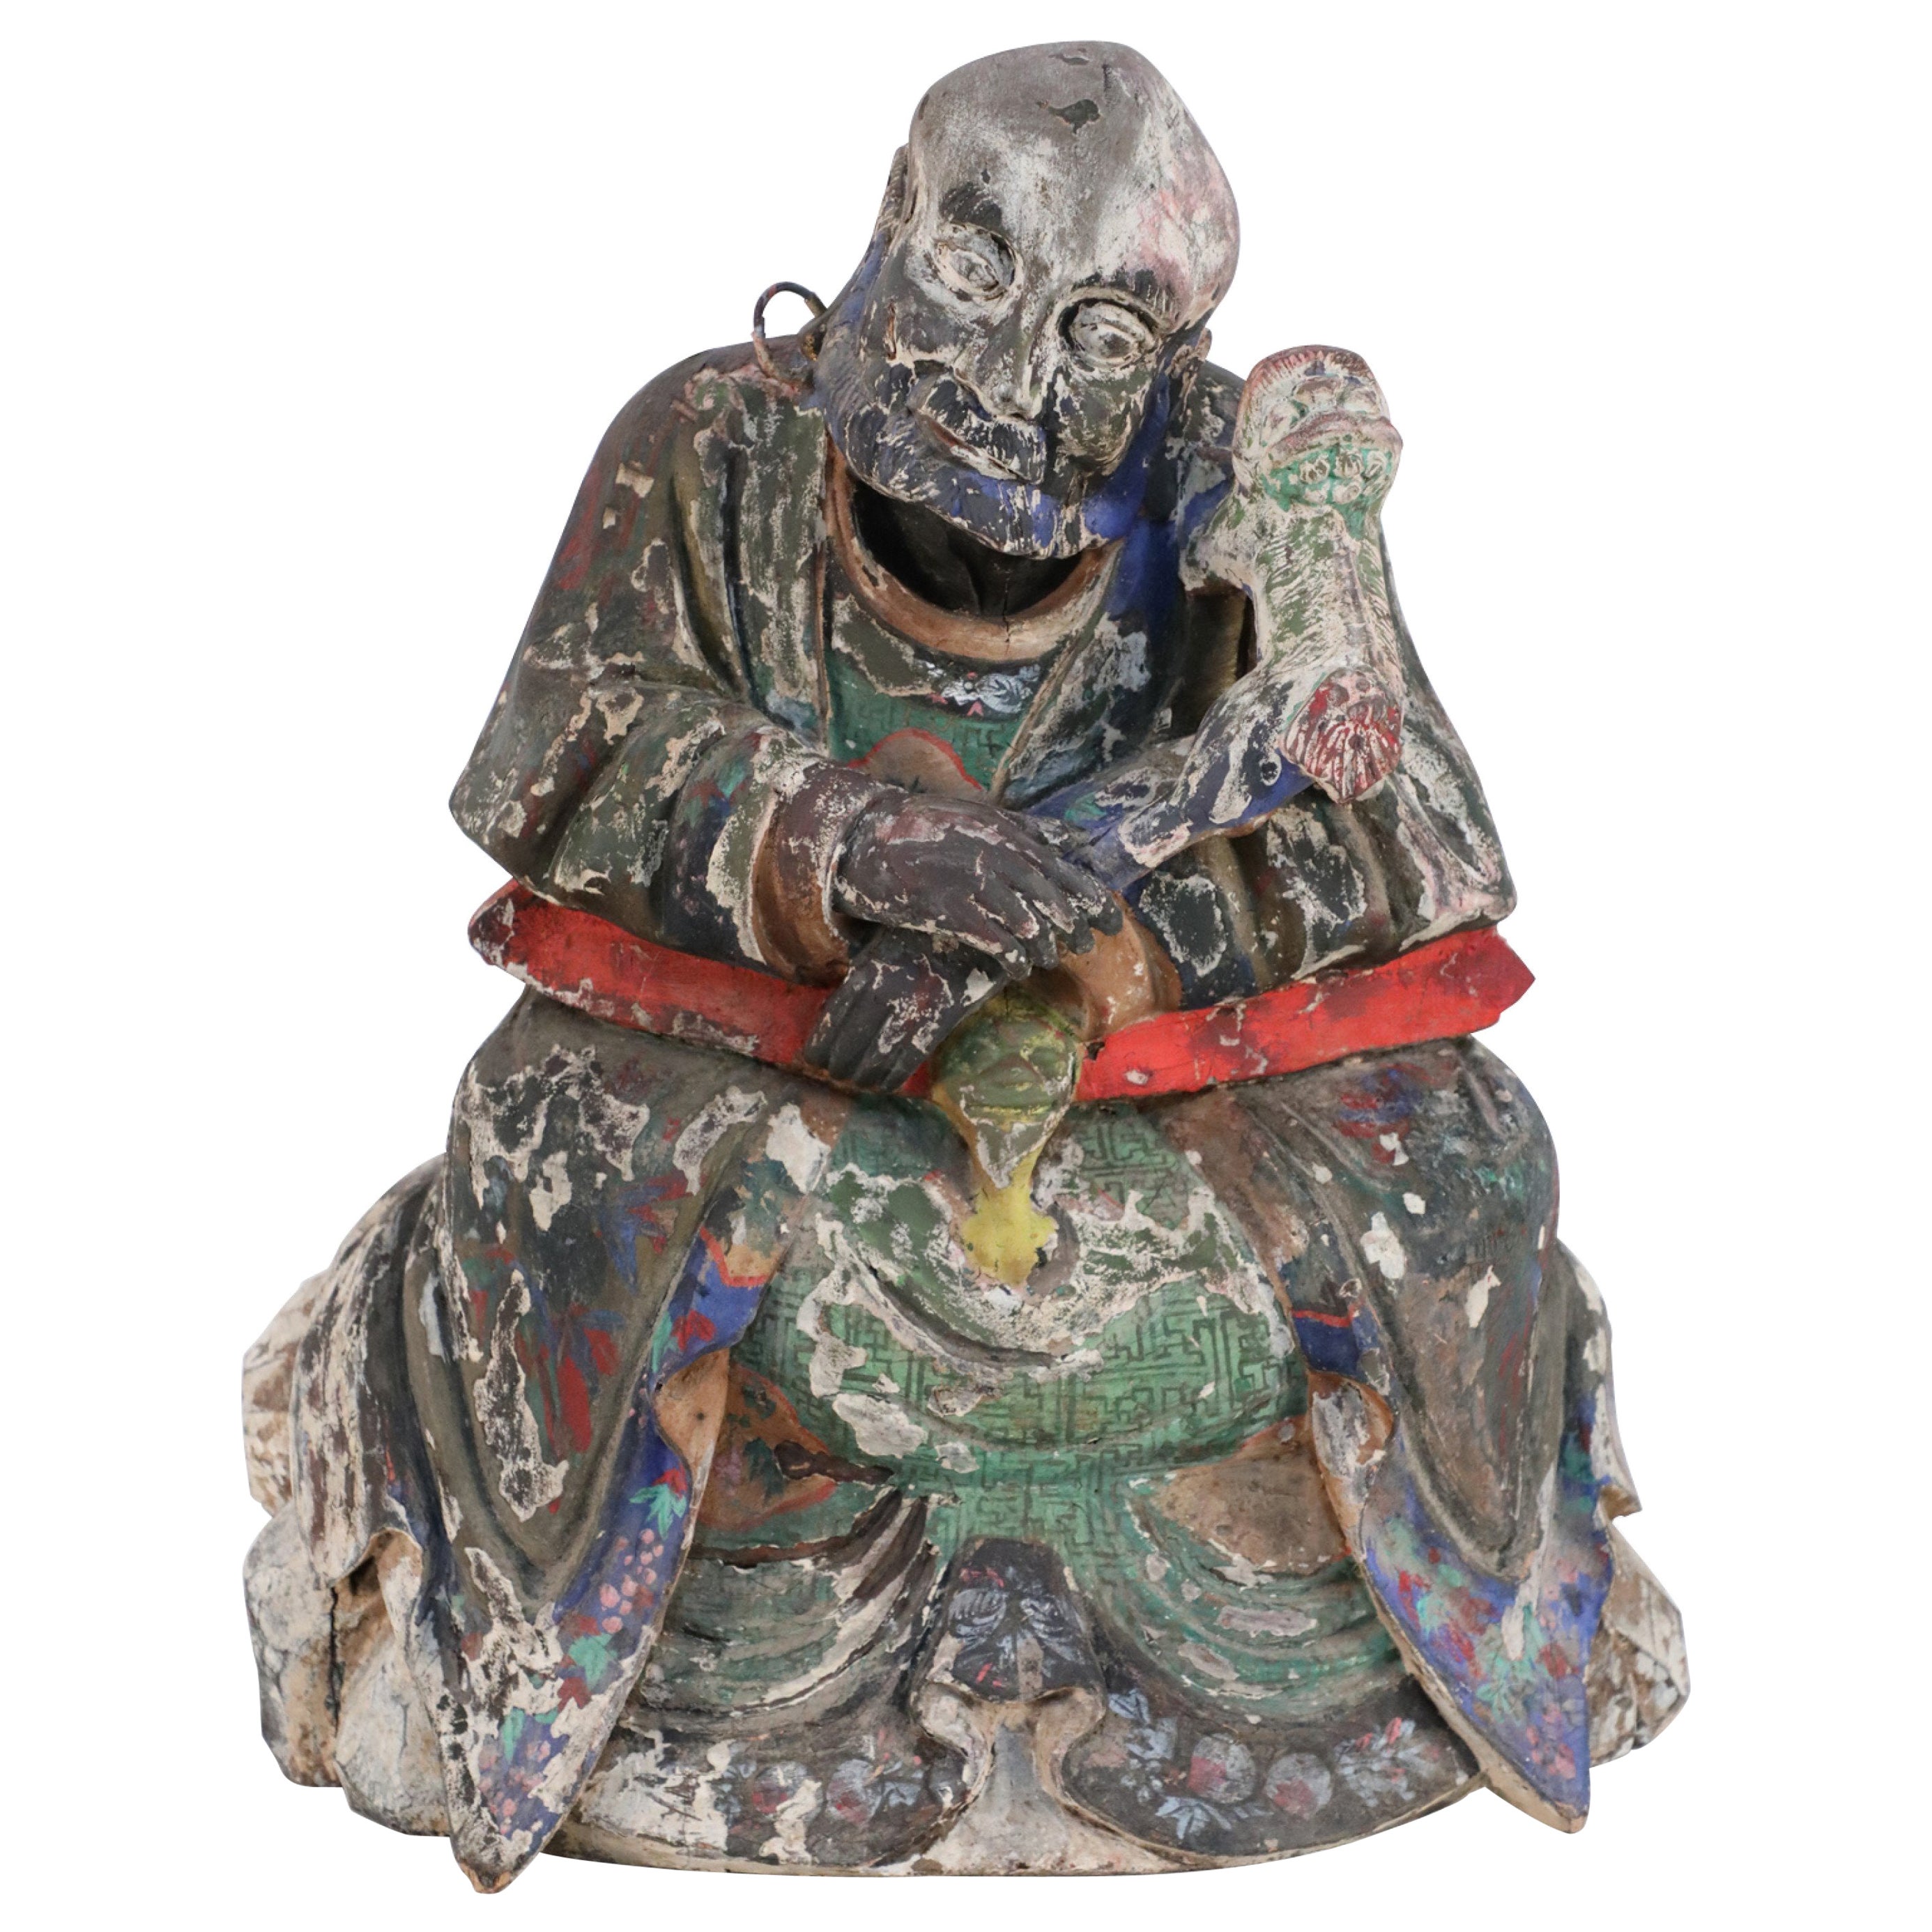 Antike chinesische Buddha-Statue aus bemaltem Ton